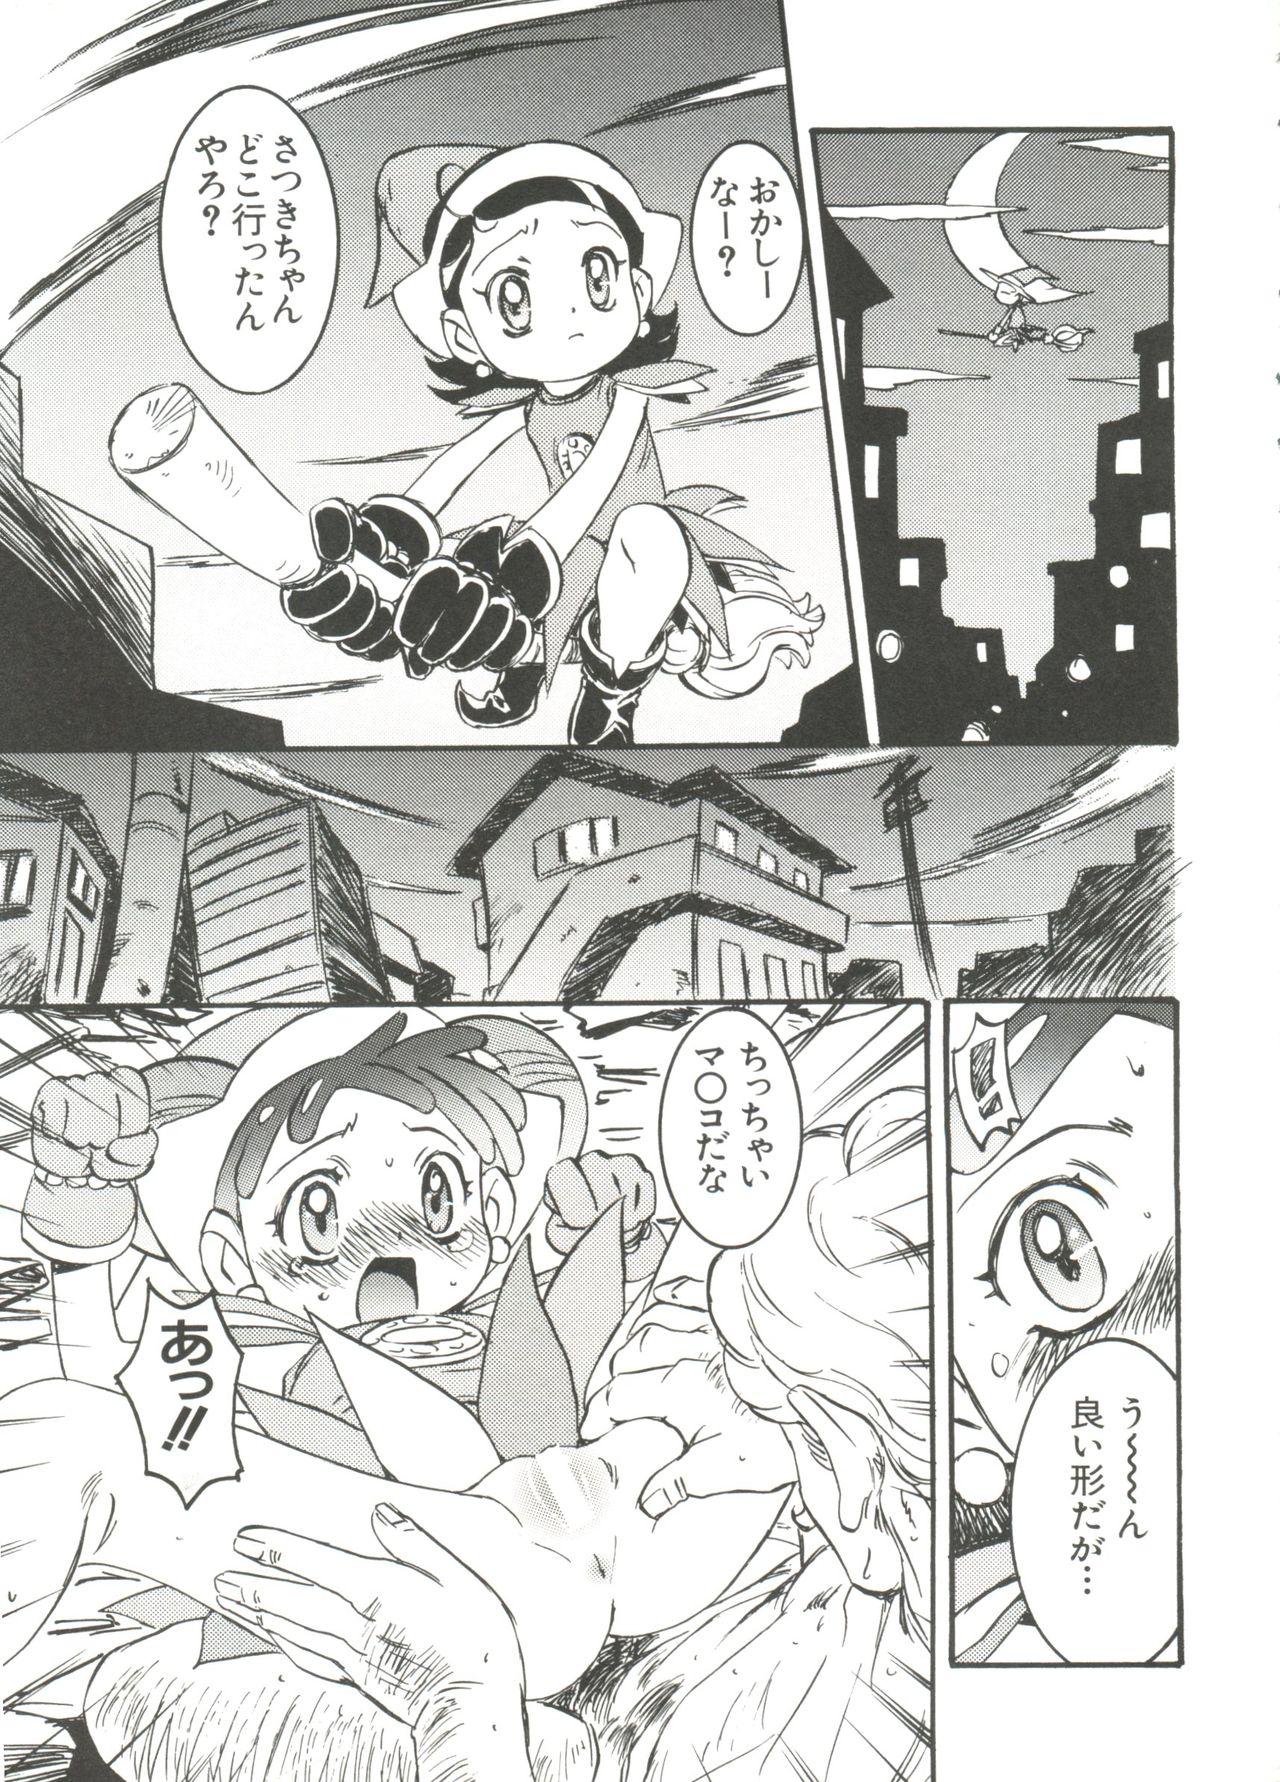 Tittyfuck Love Chara Taizen No. 4 - Ojamajo doremi Tenchi muyo Love hina Detective conan Digimon adventure Betterman Agent aika Mahou tsukai tai Alien 9 Boss - Page 7